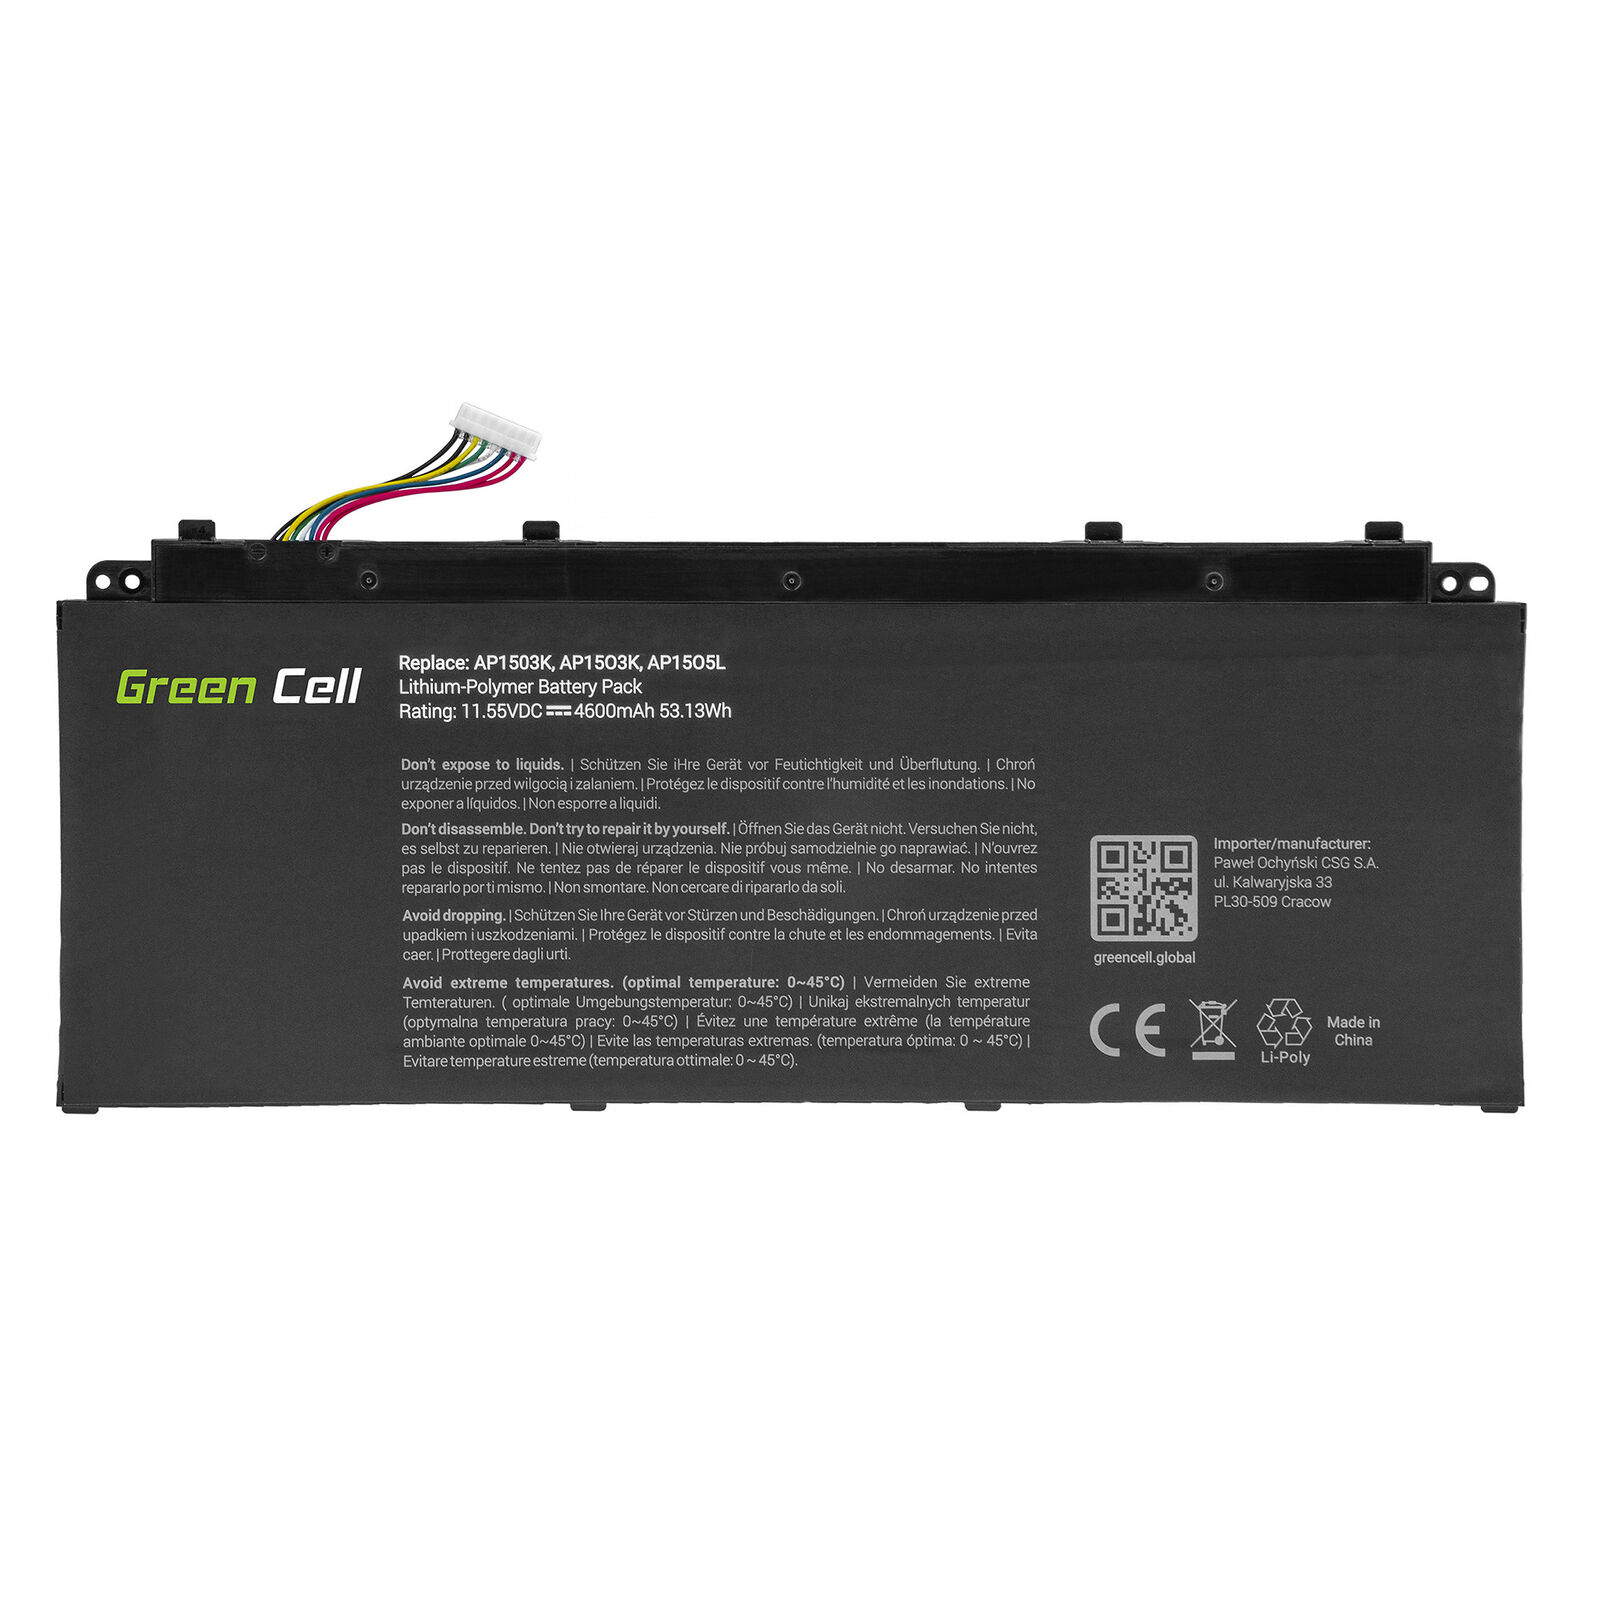 Batteri til AP1503K AP1505L AP15O3K AP15O5L Acer Aspire S 13 Swift 1 Swift 5 (kompatibelt)